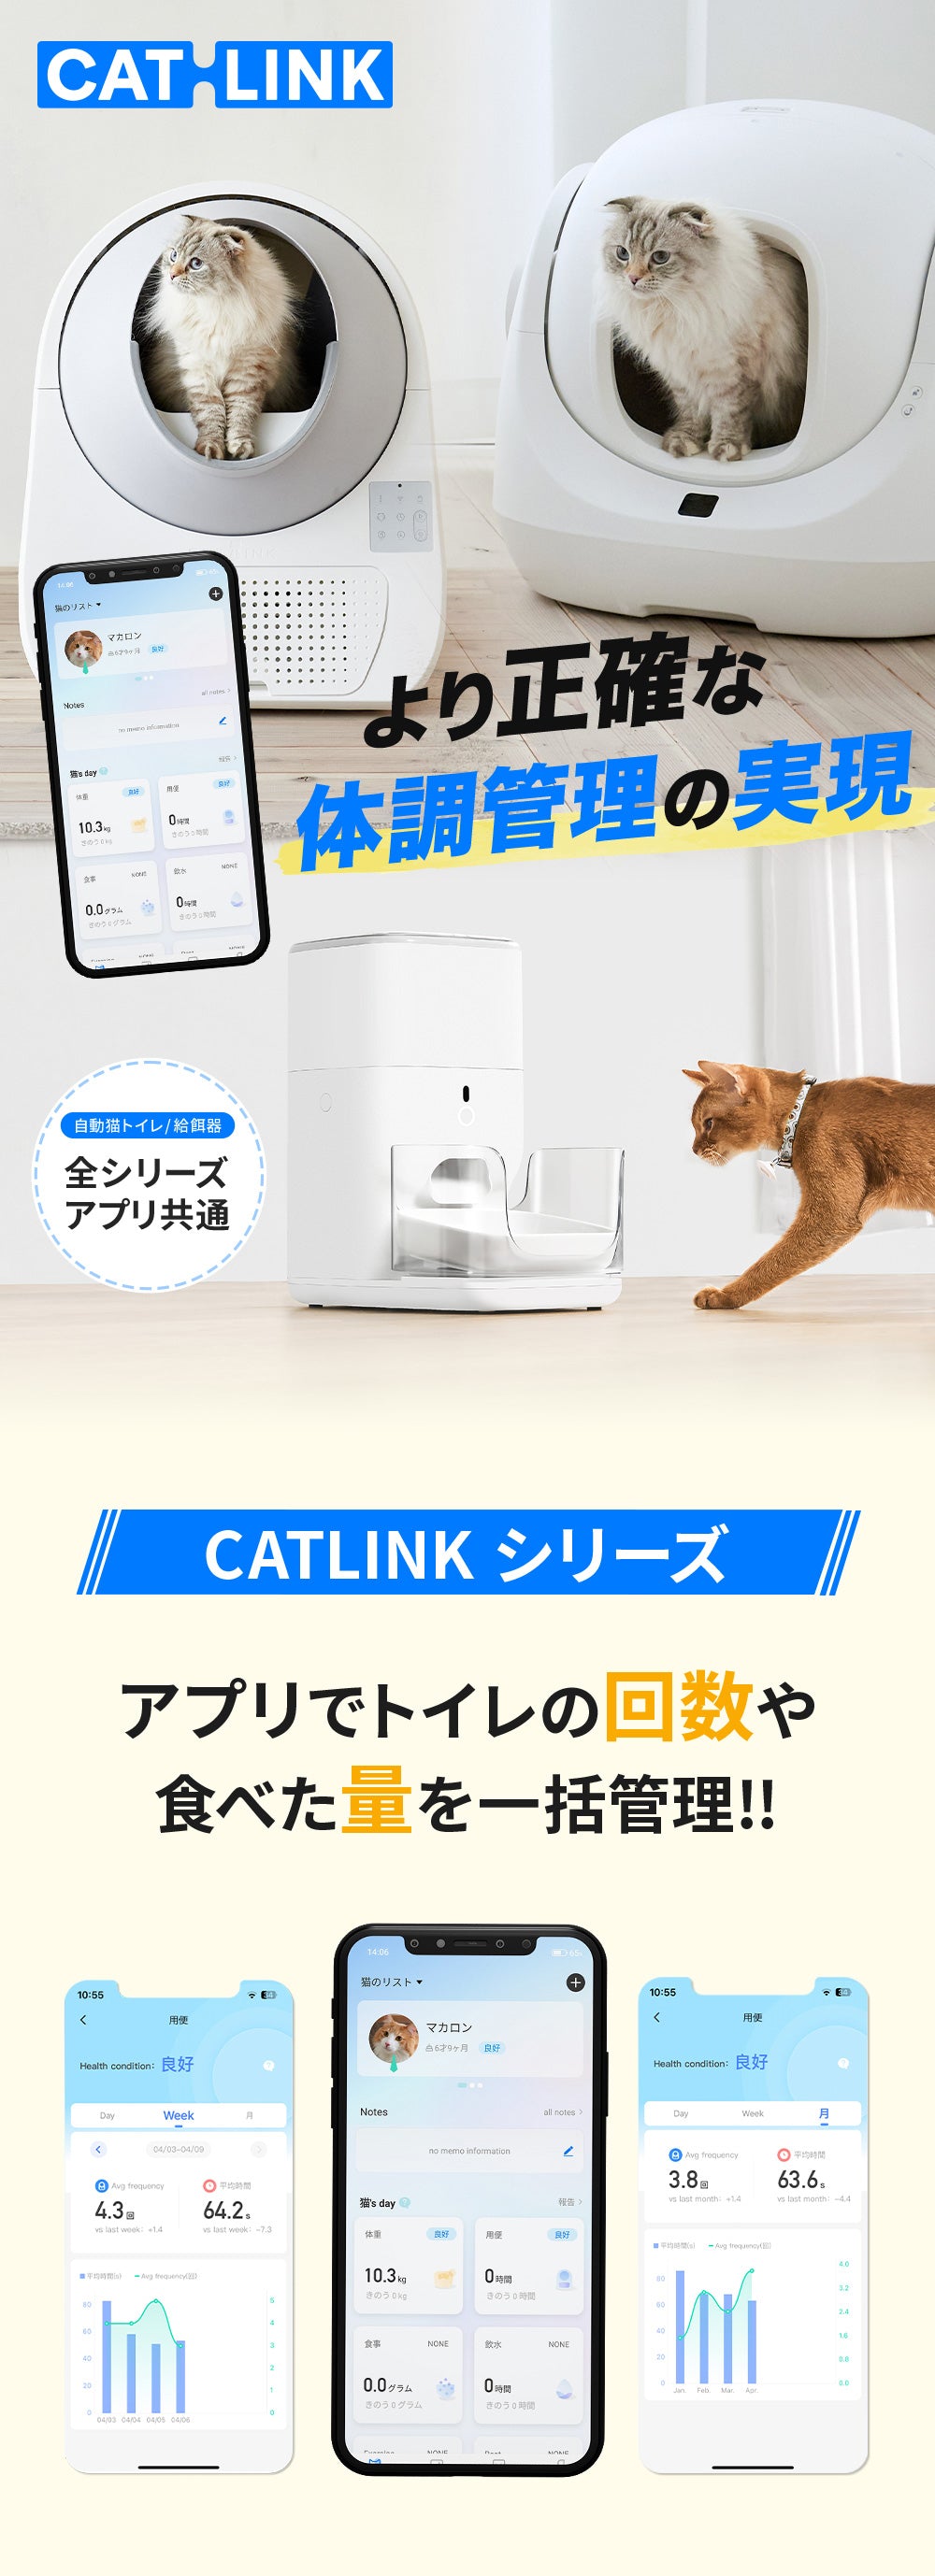 CATLINK_FRESH2_共通アプリ